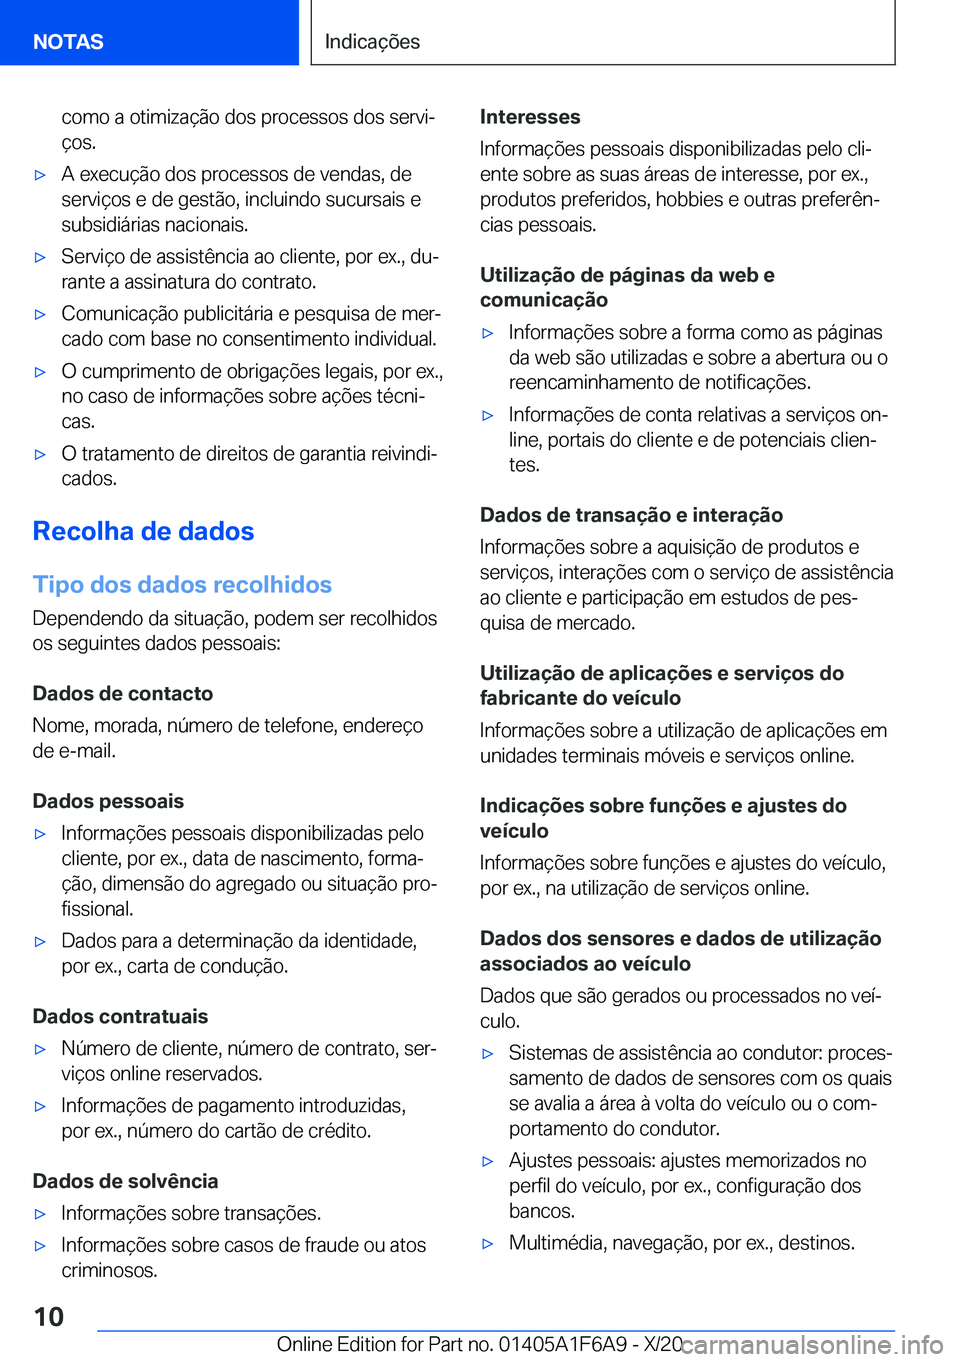 BMW X4 2021  Manual do condutor (in Portuguese) �c�o�m�o��a��o�t�i�m�i�z�a�